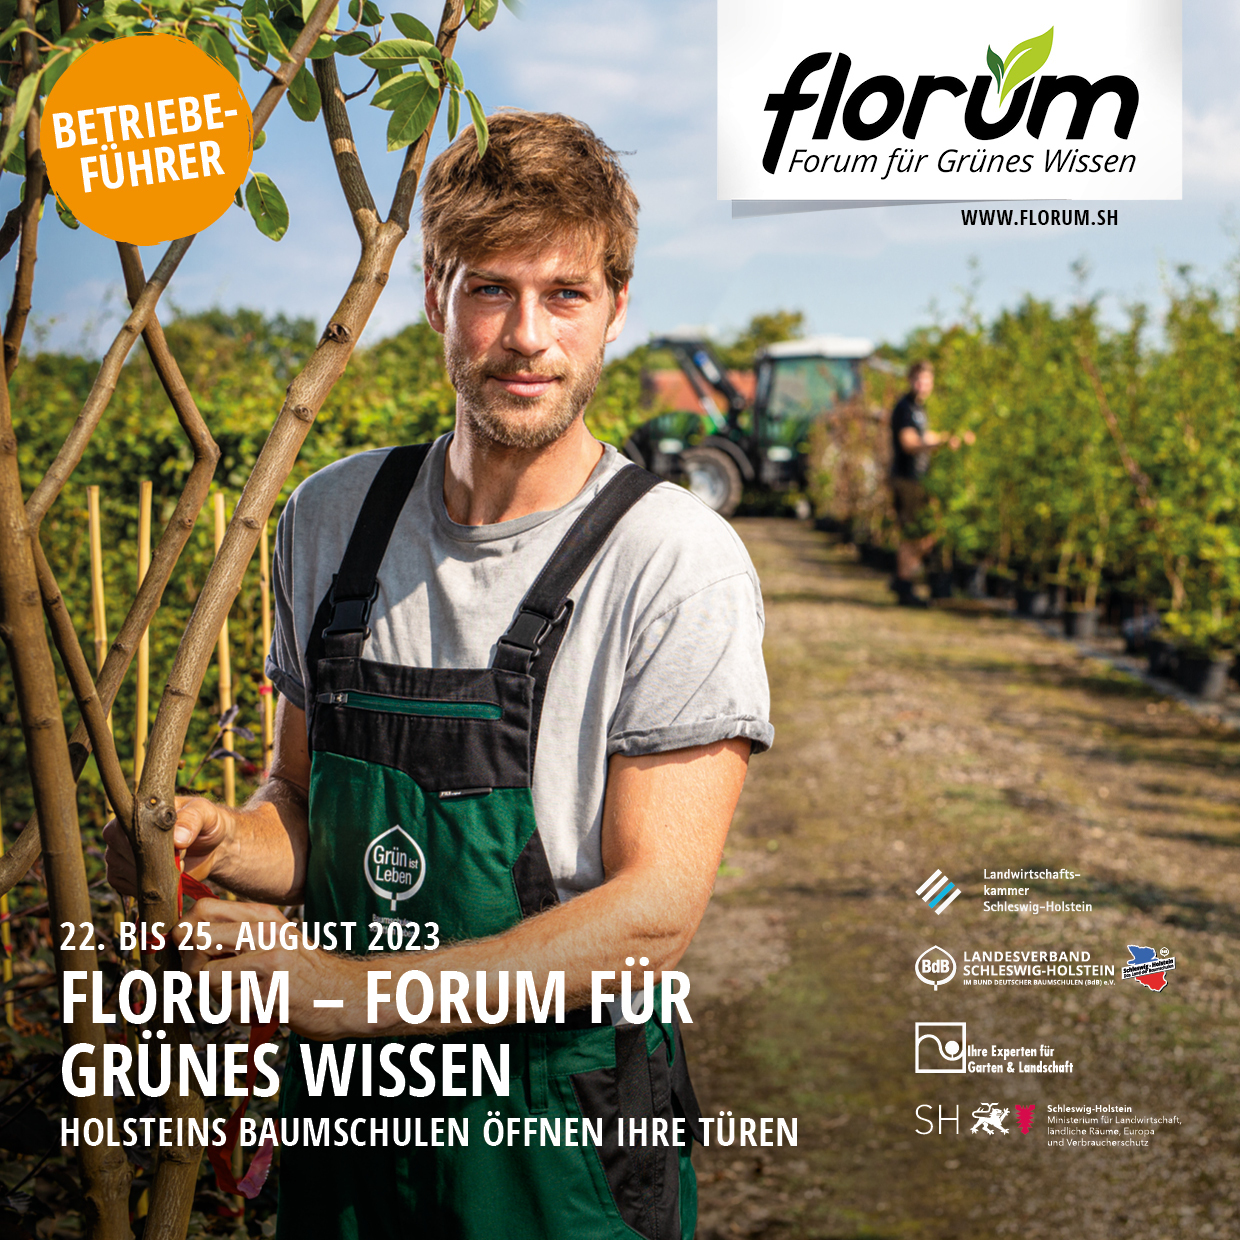 Betriebeführer Florum 2023